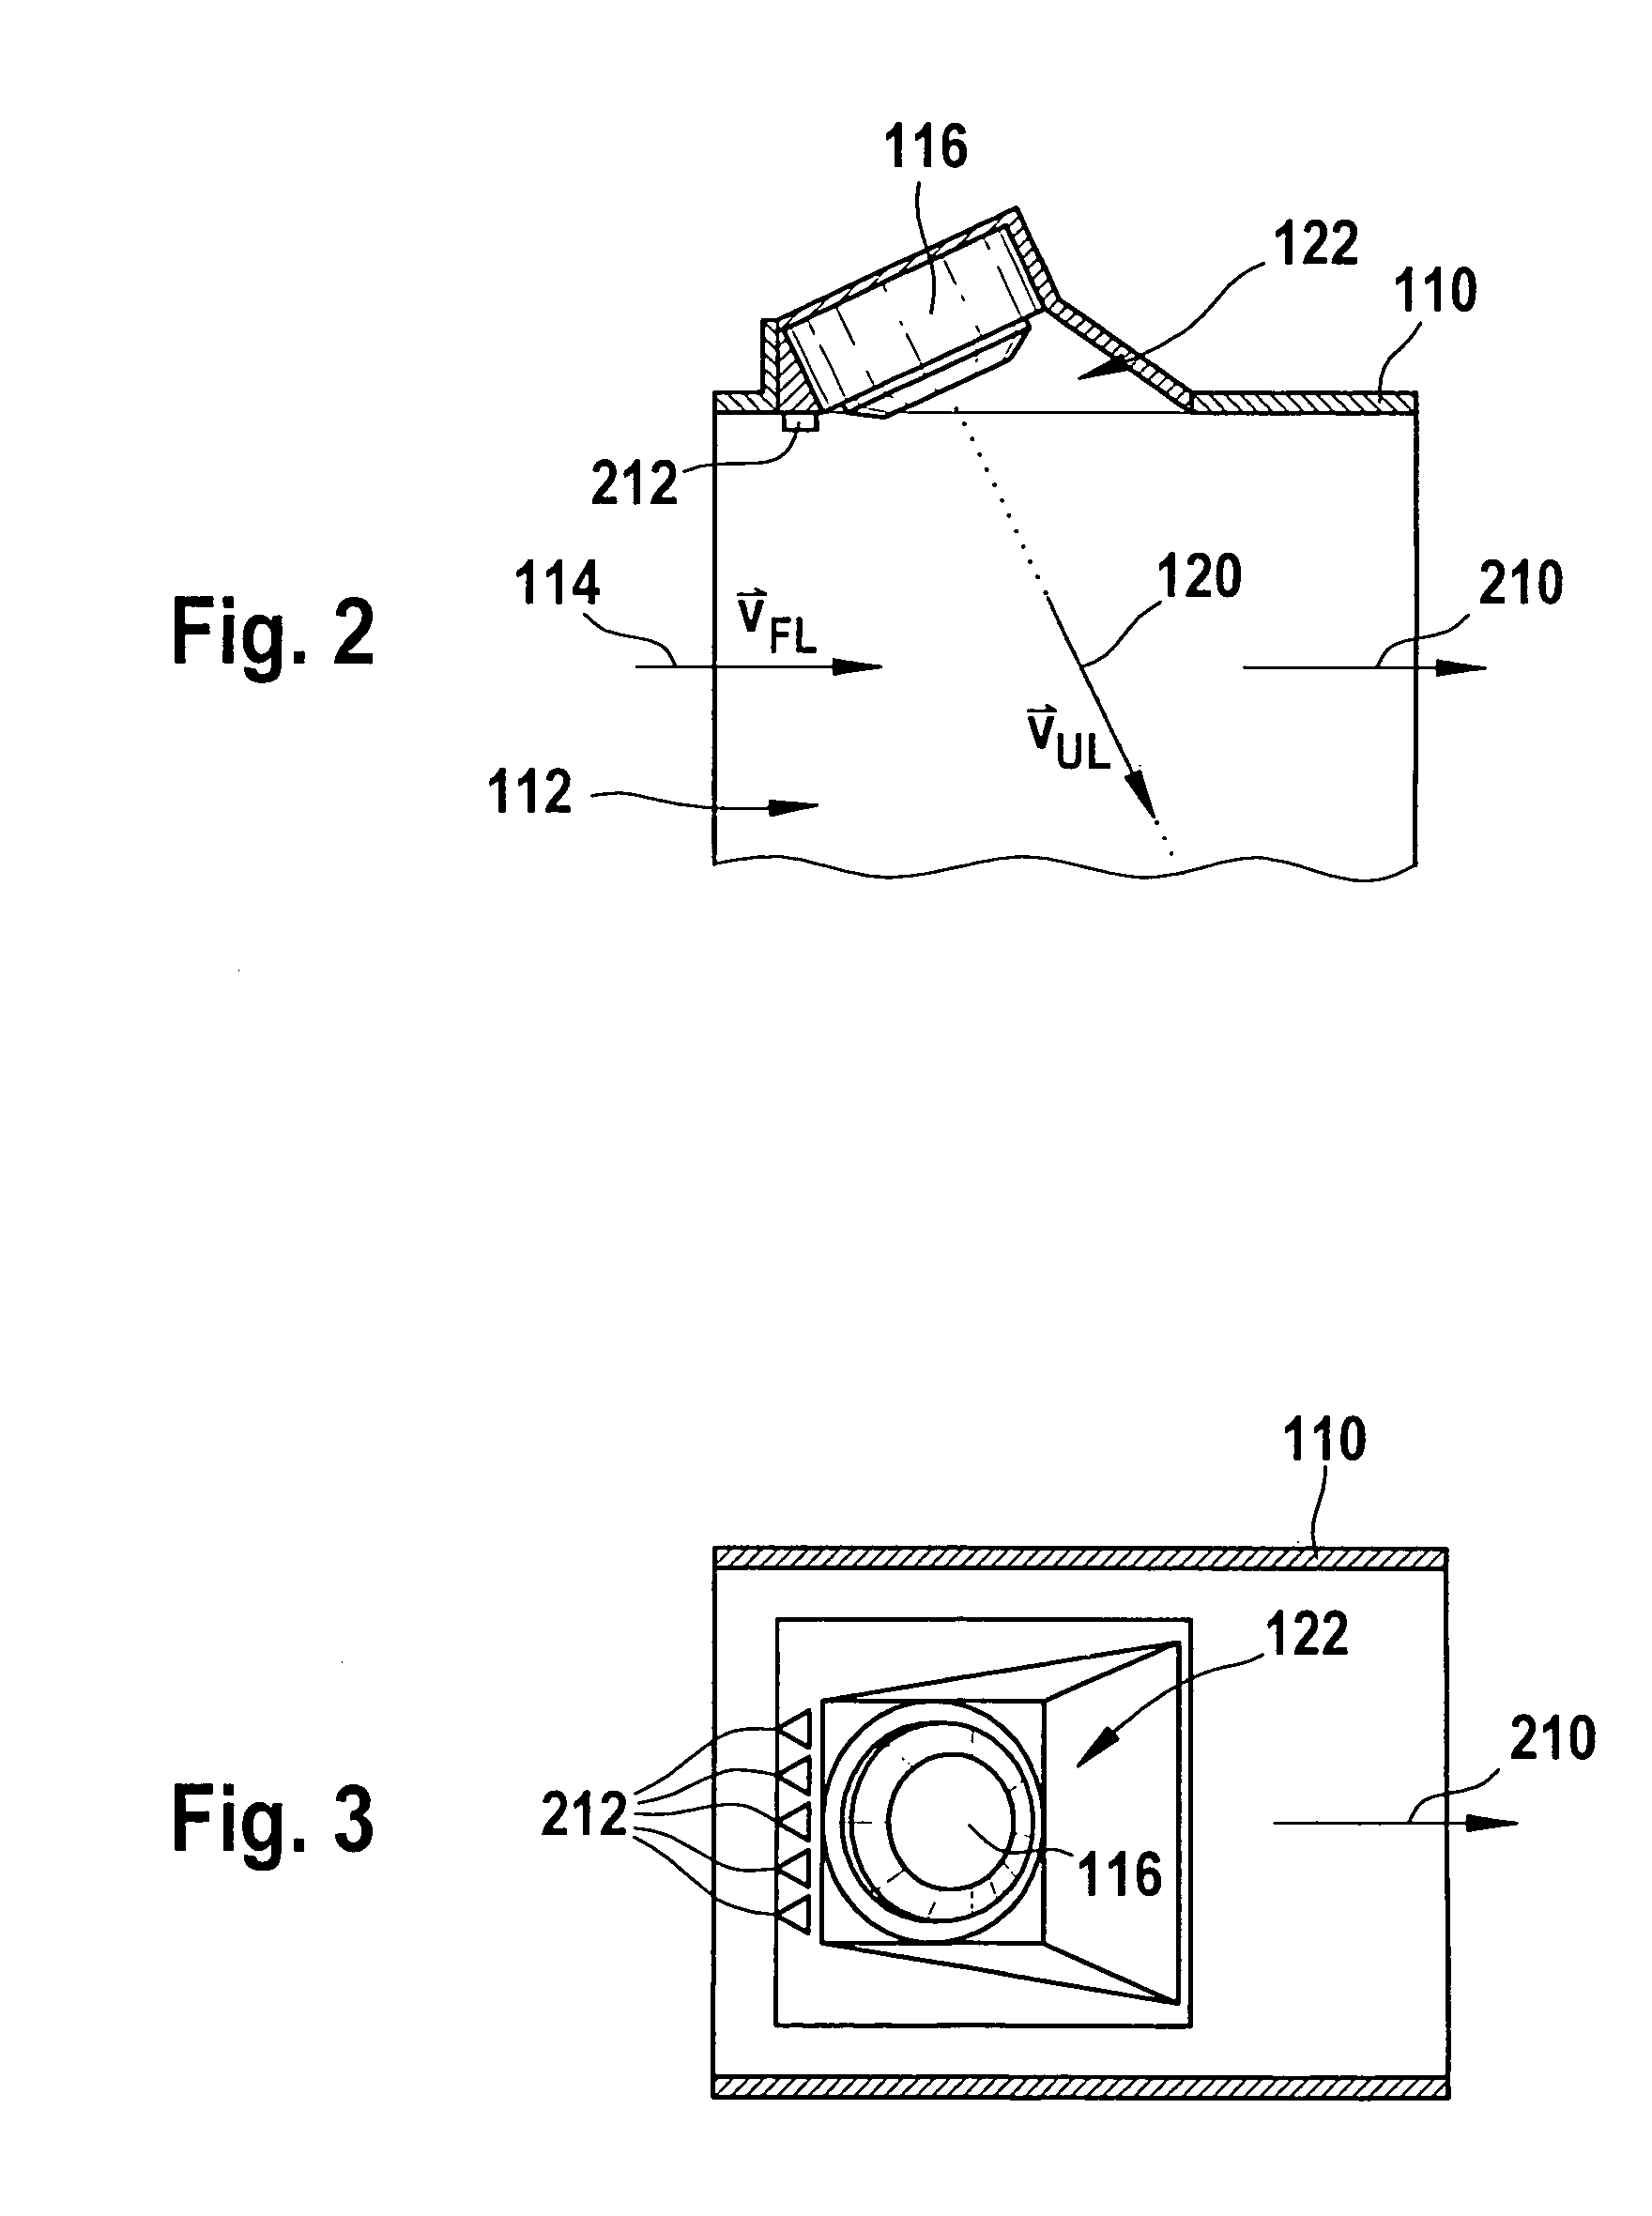 Ultrasonic flow meter including turbulators